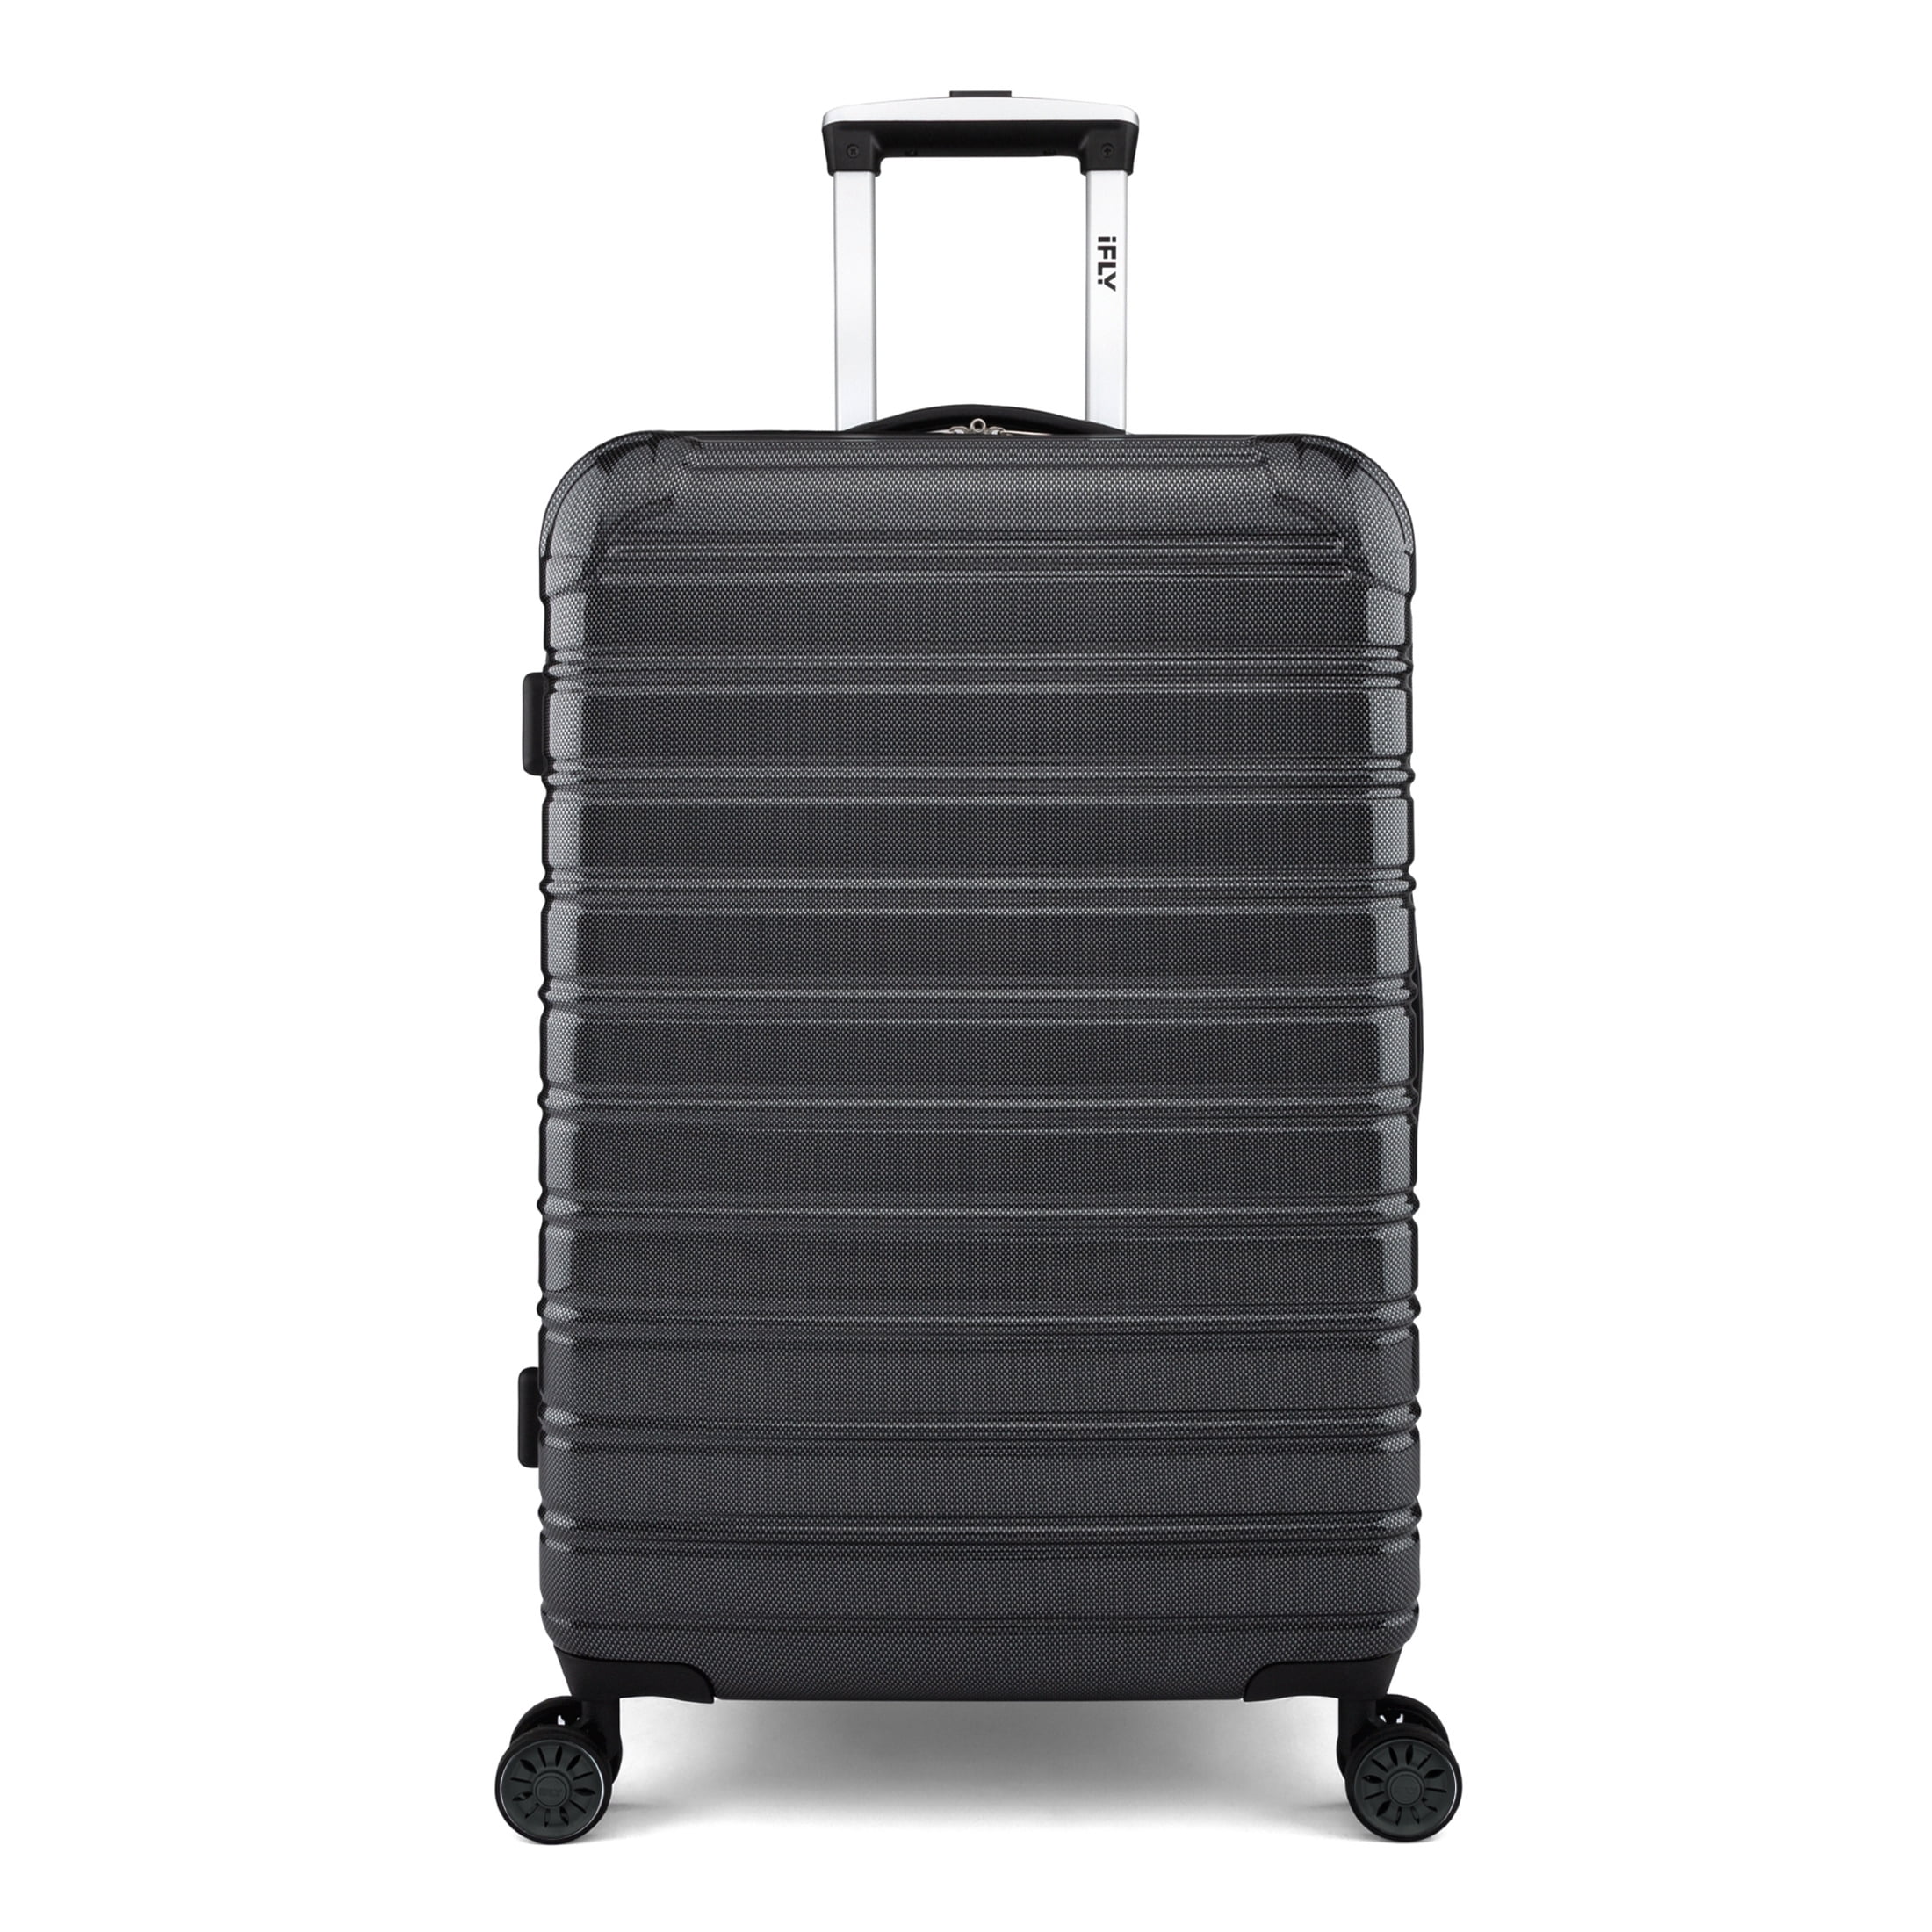 iFLY Hardside Fibertech Luggage 24" Checked Luggage, Black